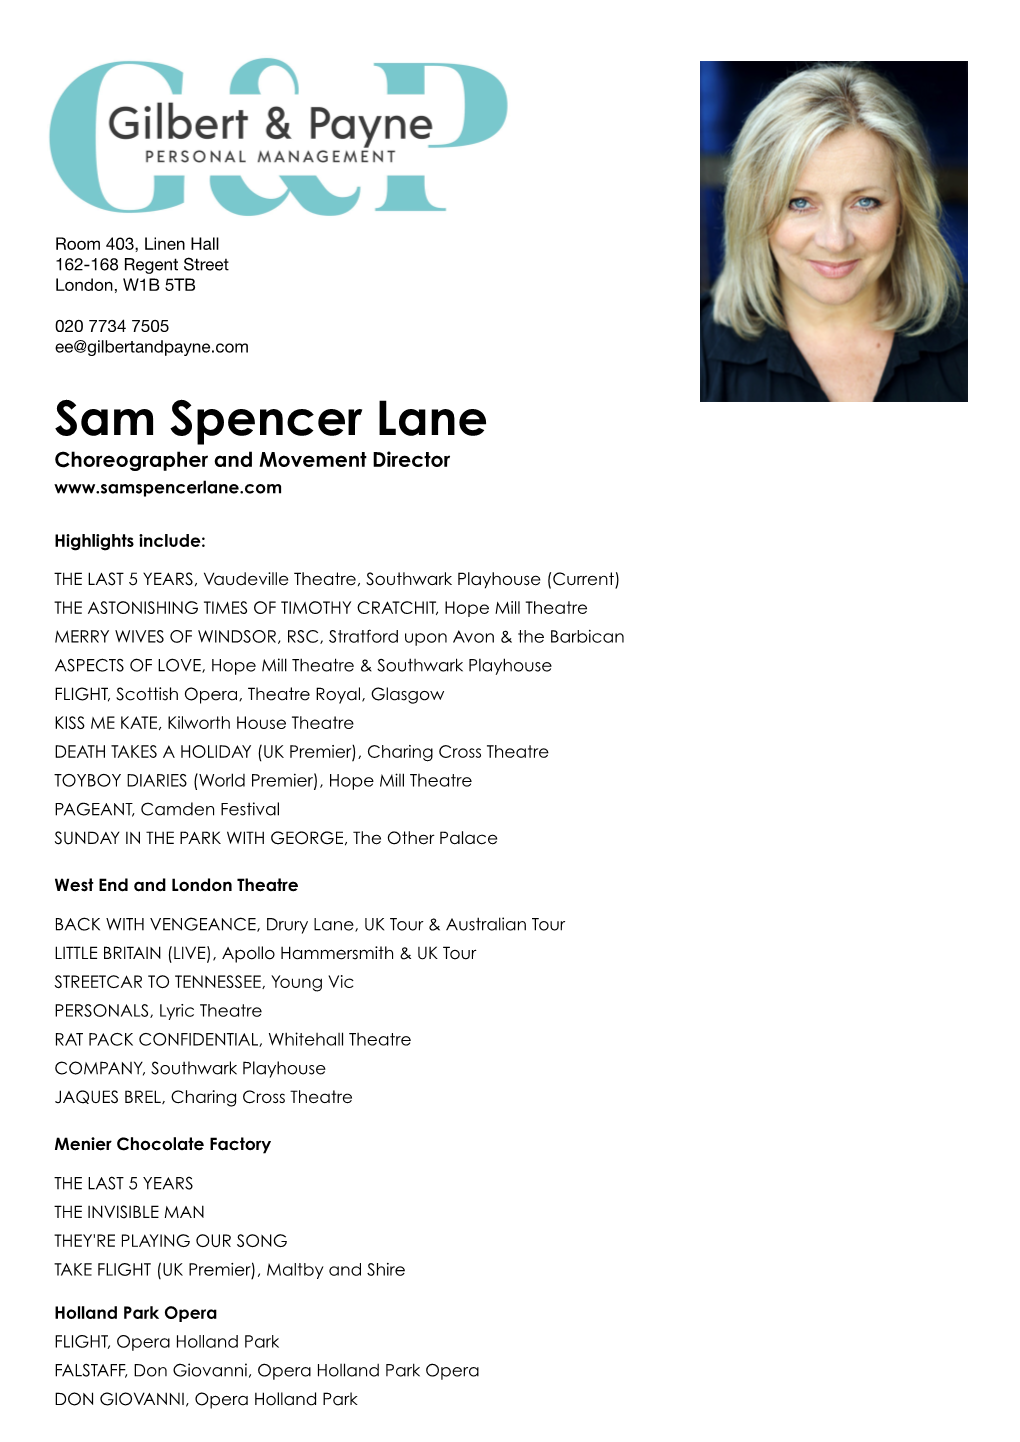 Sam Spencer Lane Choreographer and Movement Director